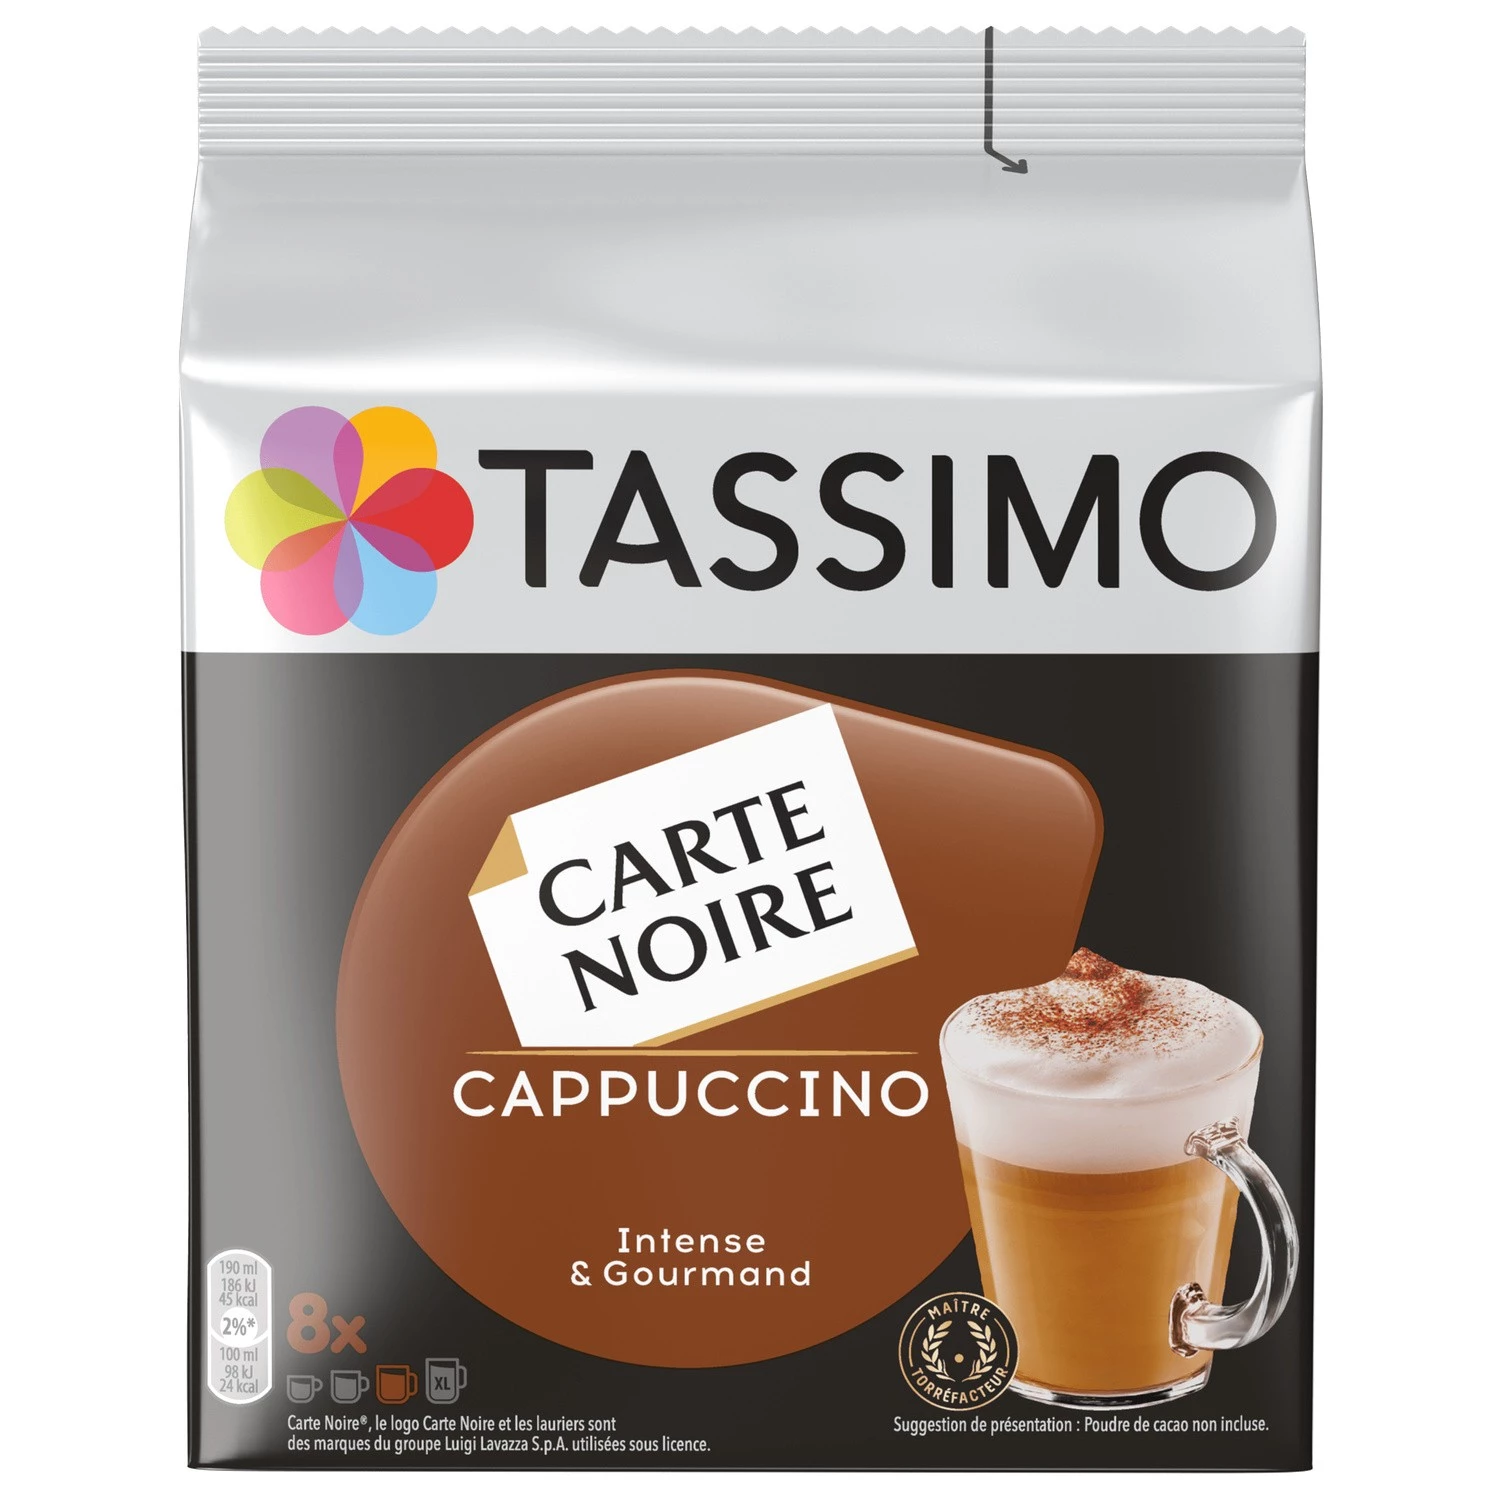 Cartoncino nero cappuccino x16 cialde 267g - TASSIMO